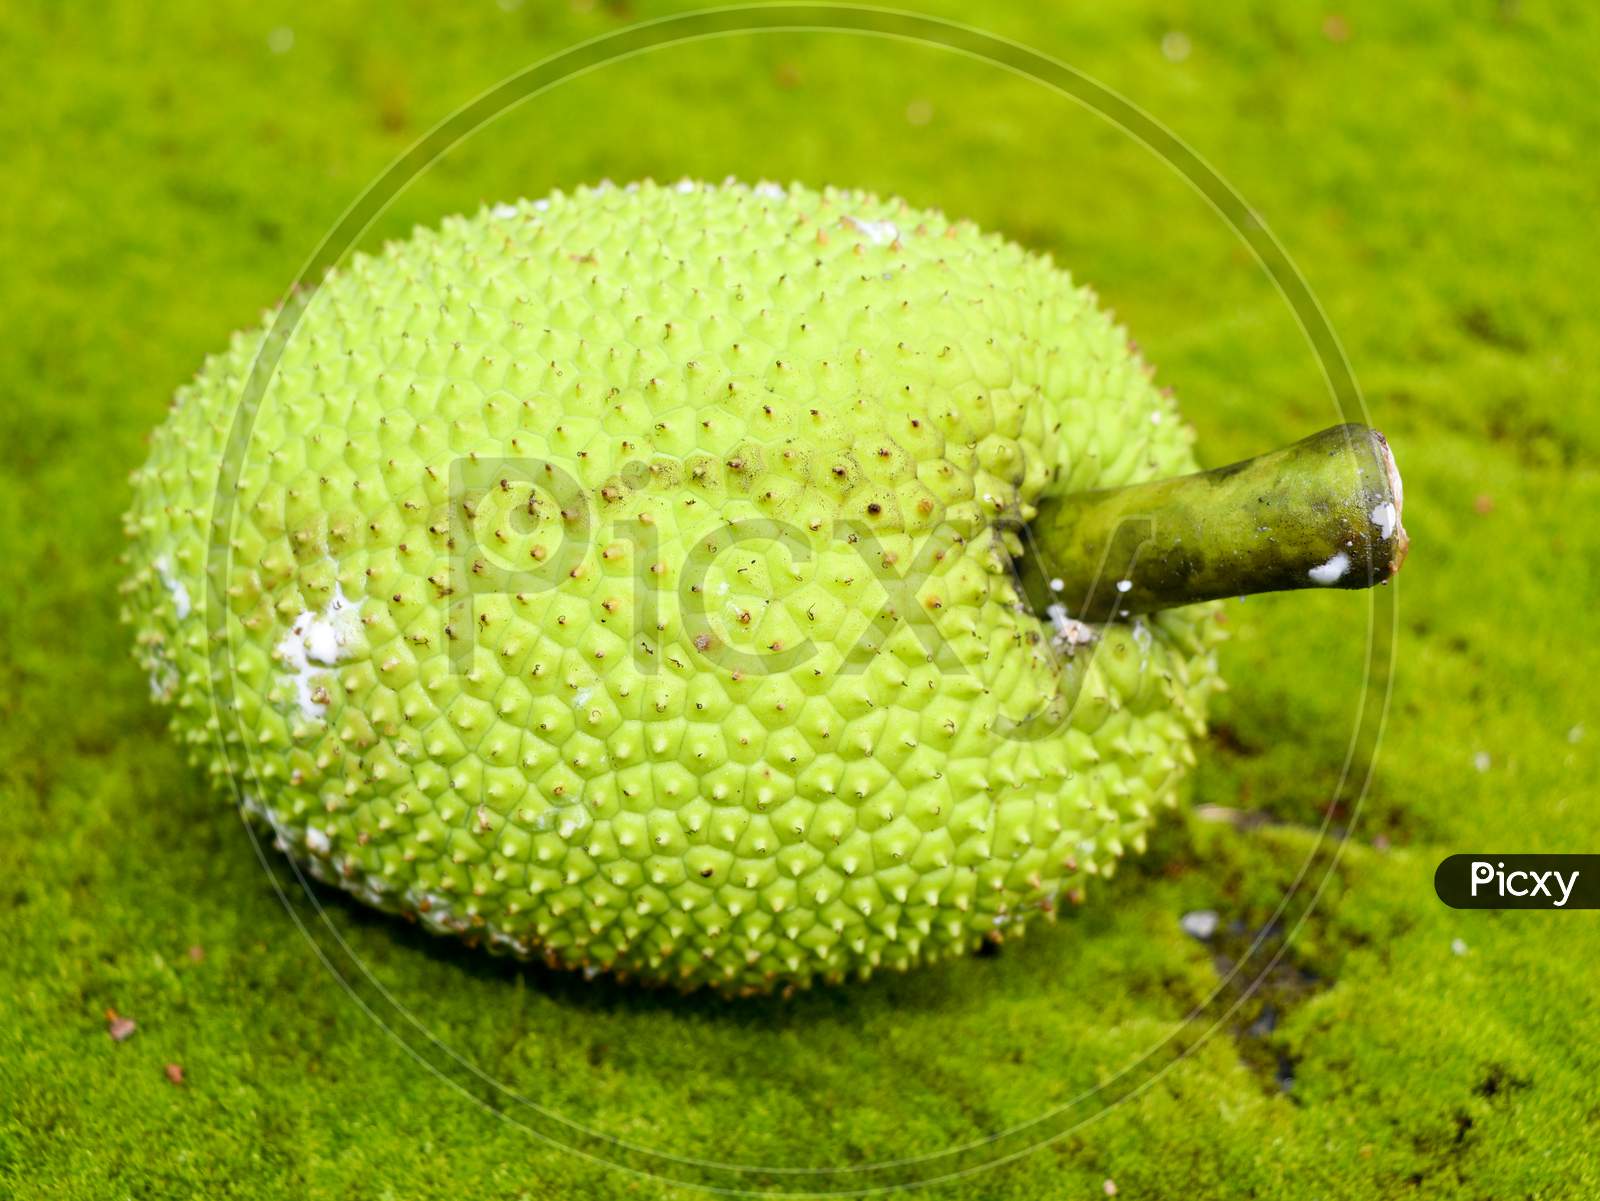 Raw Breadfruit (Artocarpus Altilis) Kept In Green Moss Background, Selective Focus